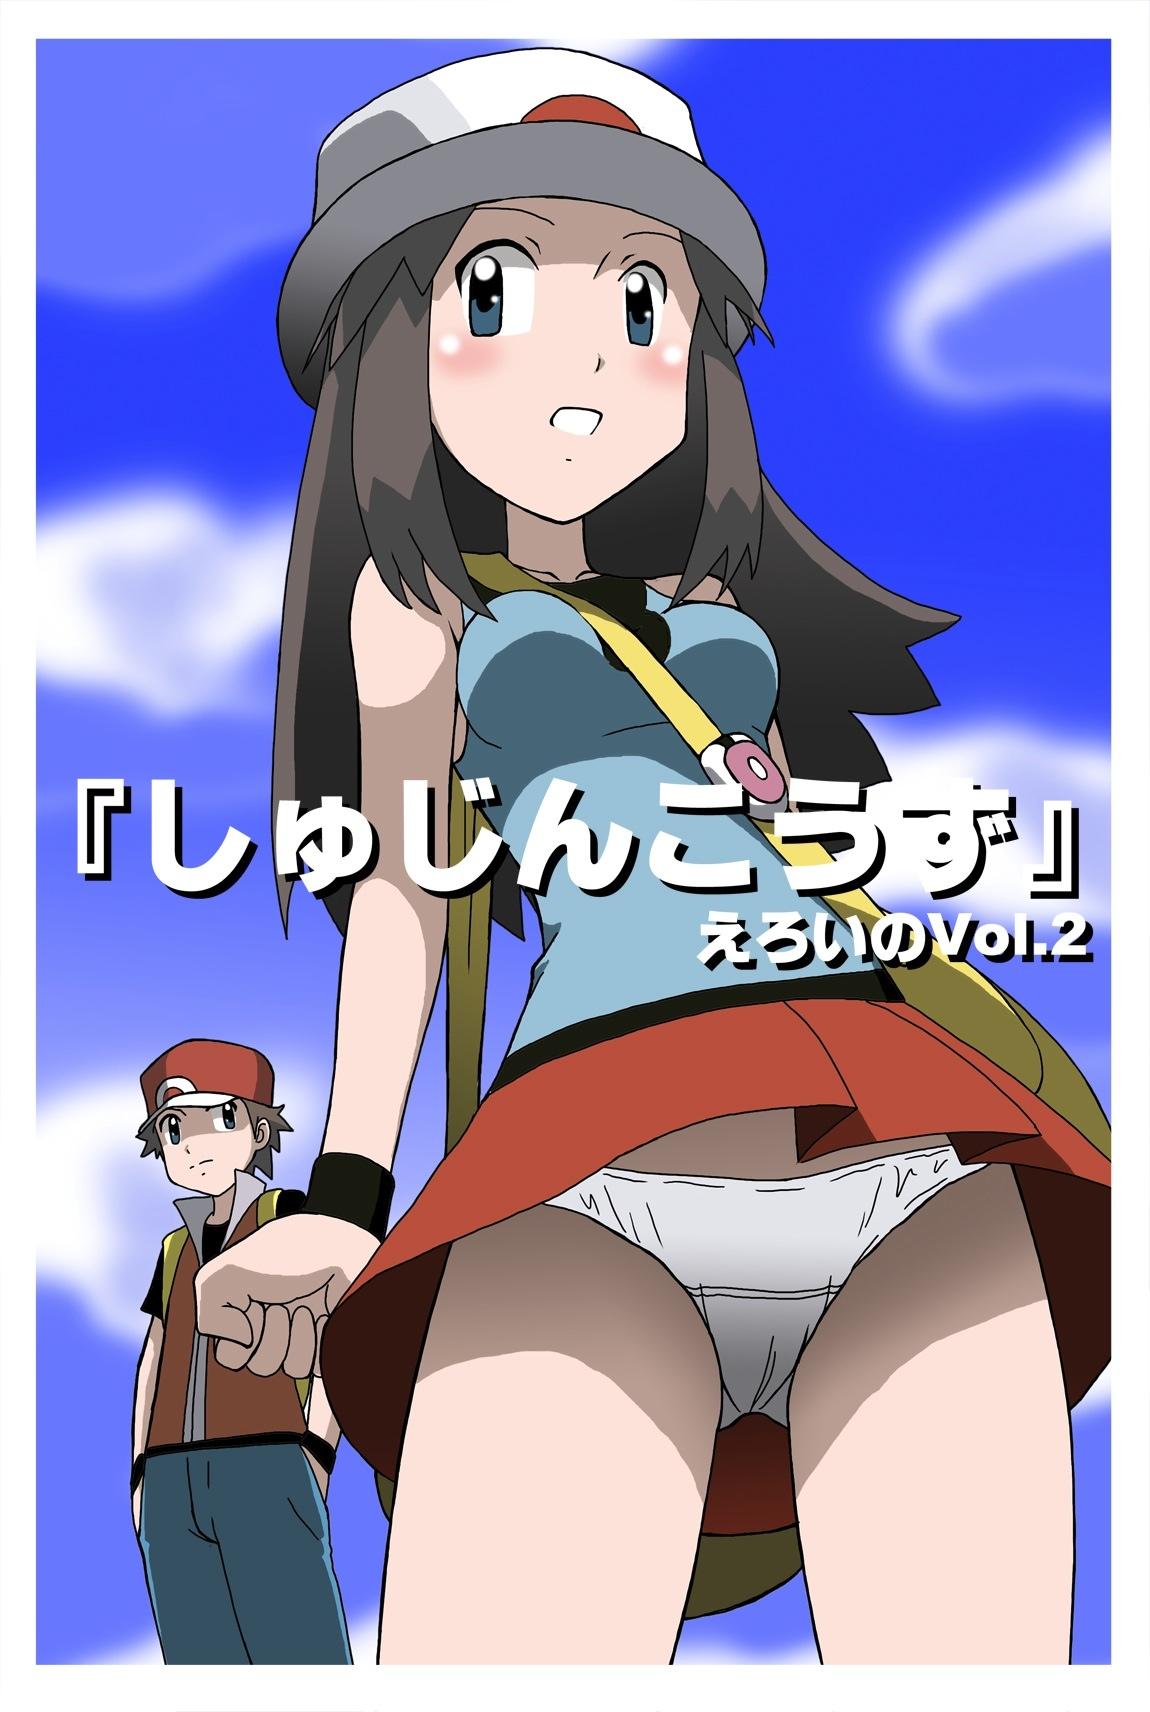 Perra 「Shujinkouzu」 Eroi no Vol.2 - Pokemon Naija - Page 1